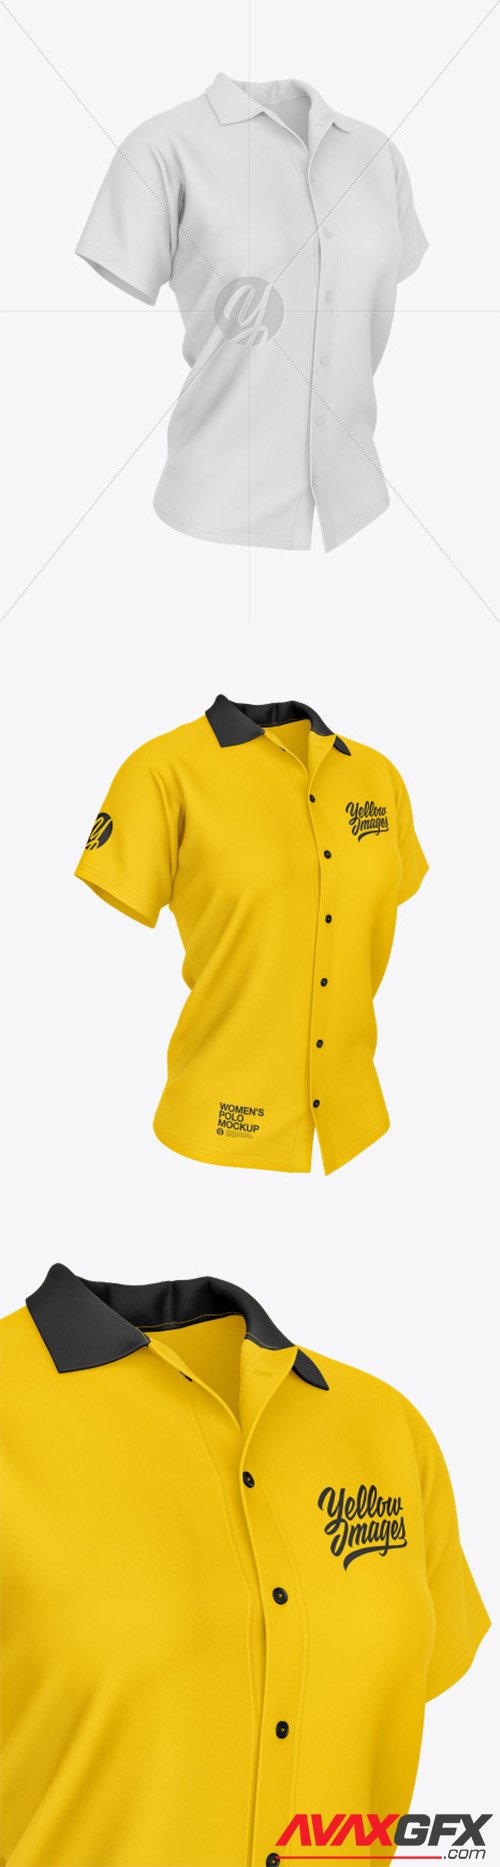 Women's Polo Shirt Mockup 56122